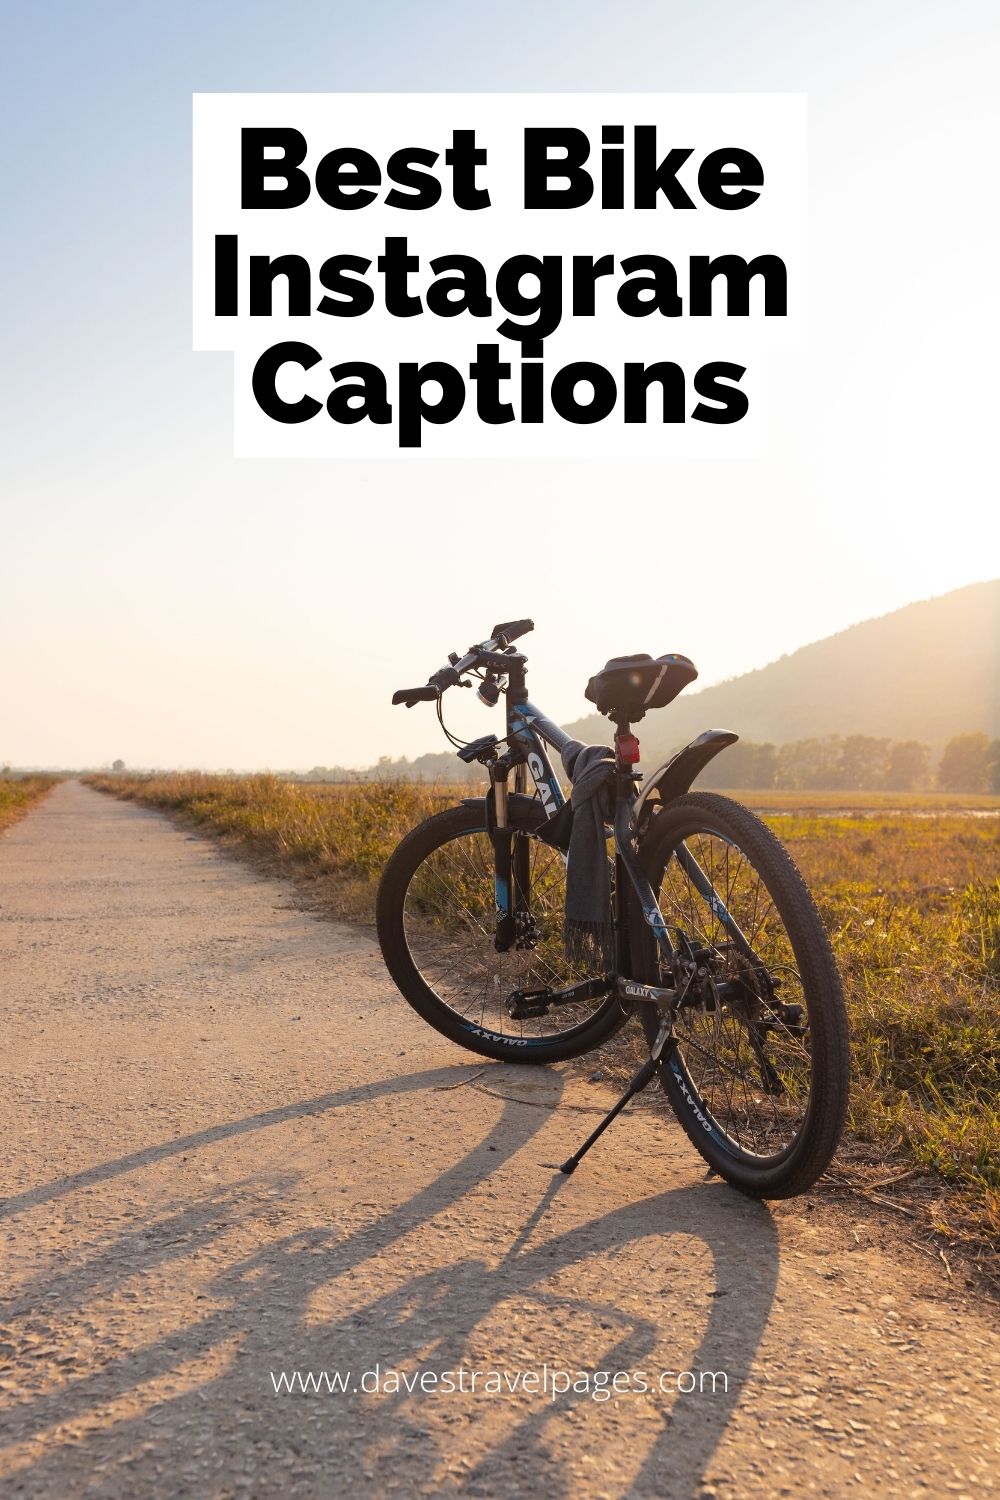 Best Bike Instagram Captions